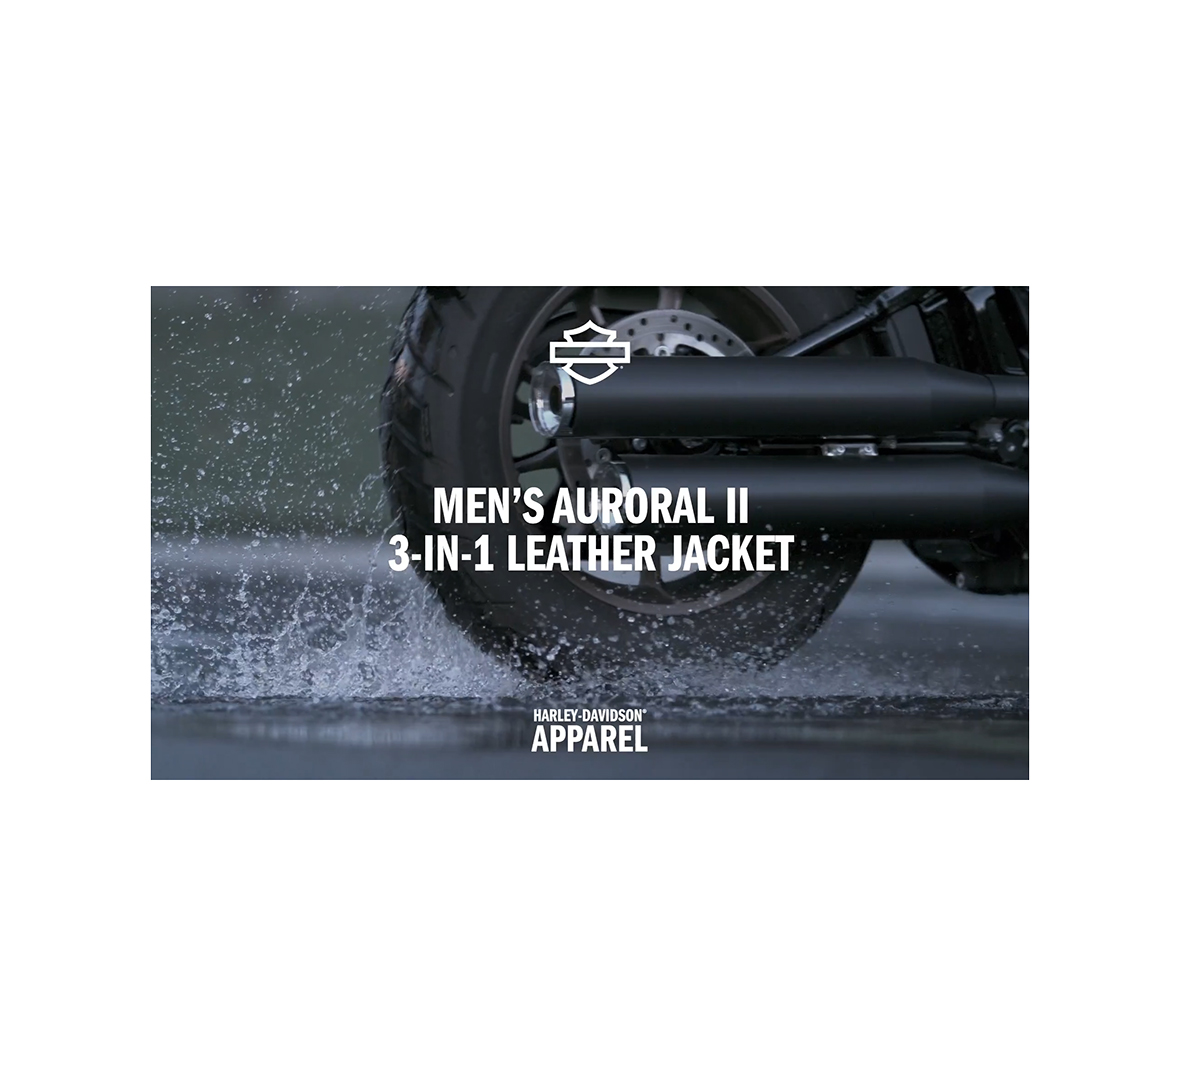 Men's Auroral II 3-in-1 Leather Jacket | Harley-Davidson USA